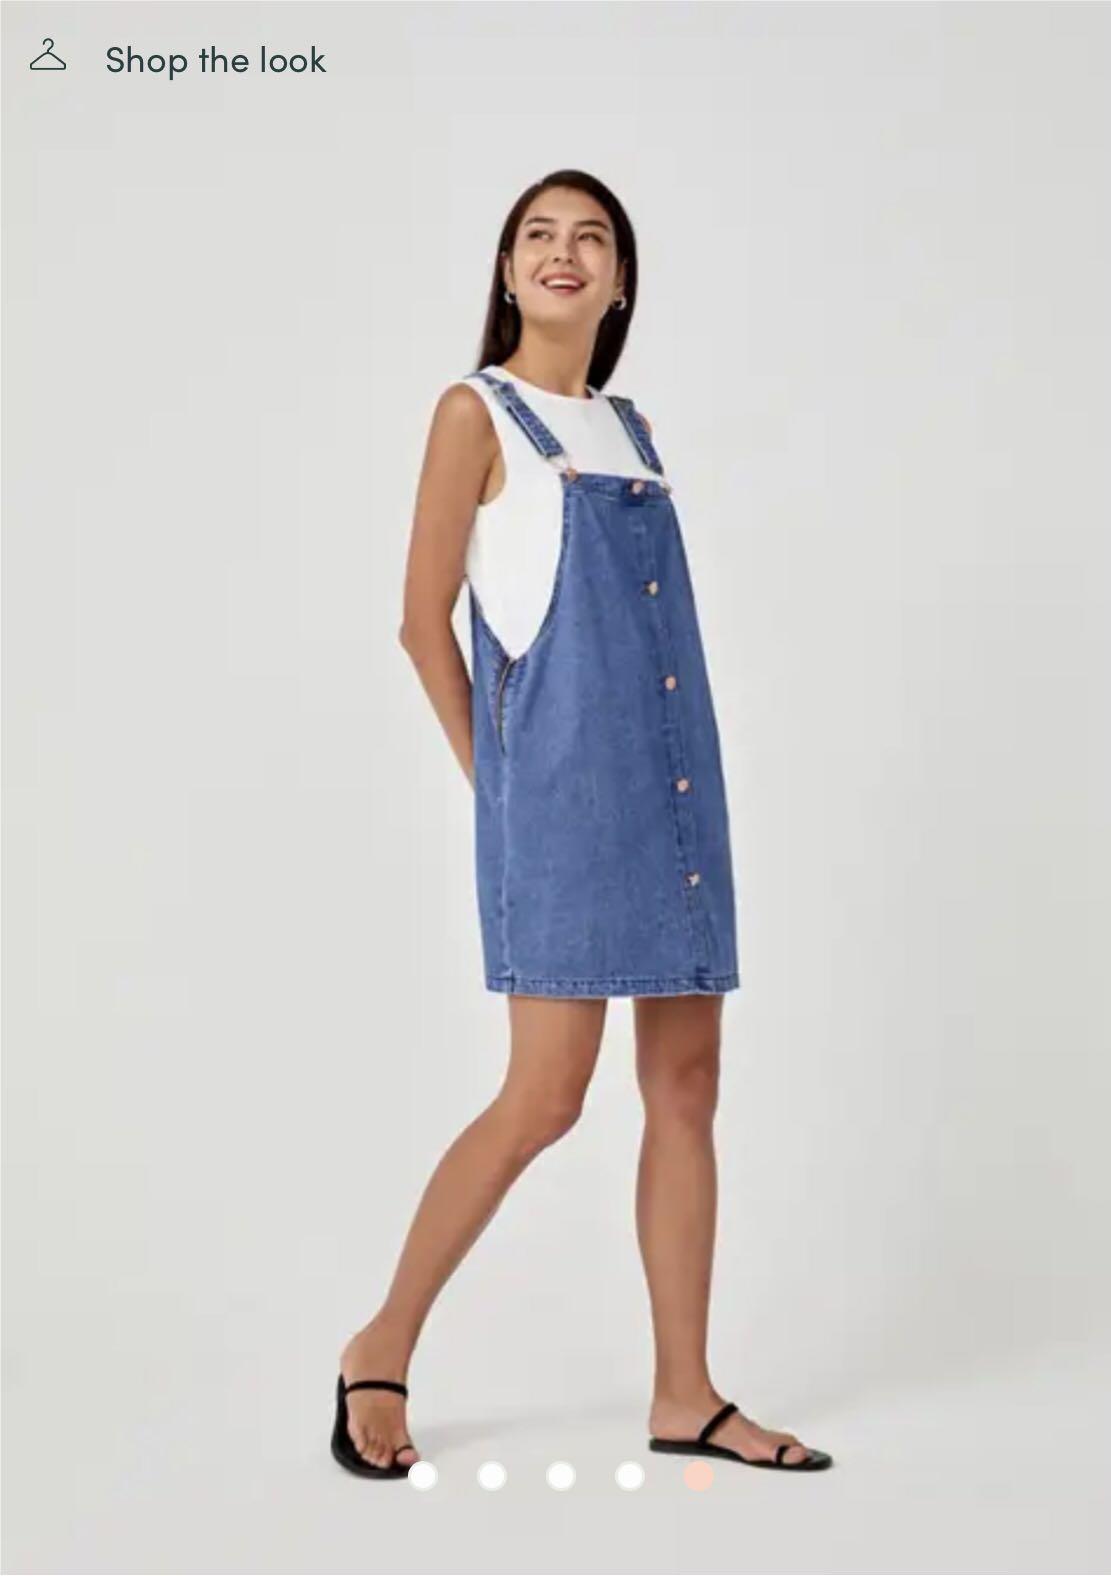 Hatch Maternity Women's THE EDIE DRESS Denim Cotton Jumper Size 2 (M/8-10)  NEW | eBay